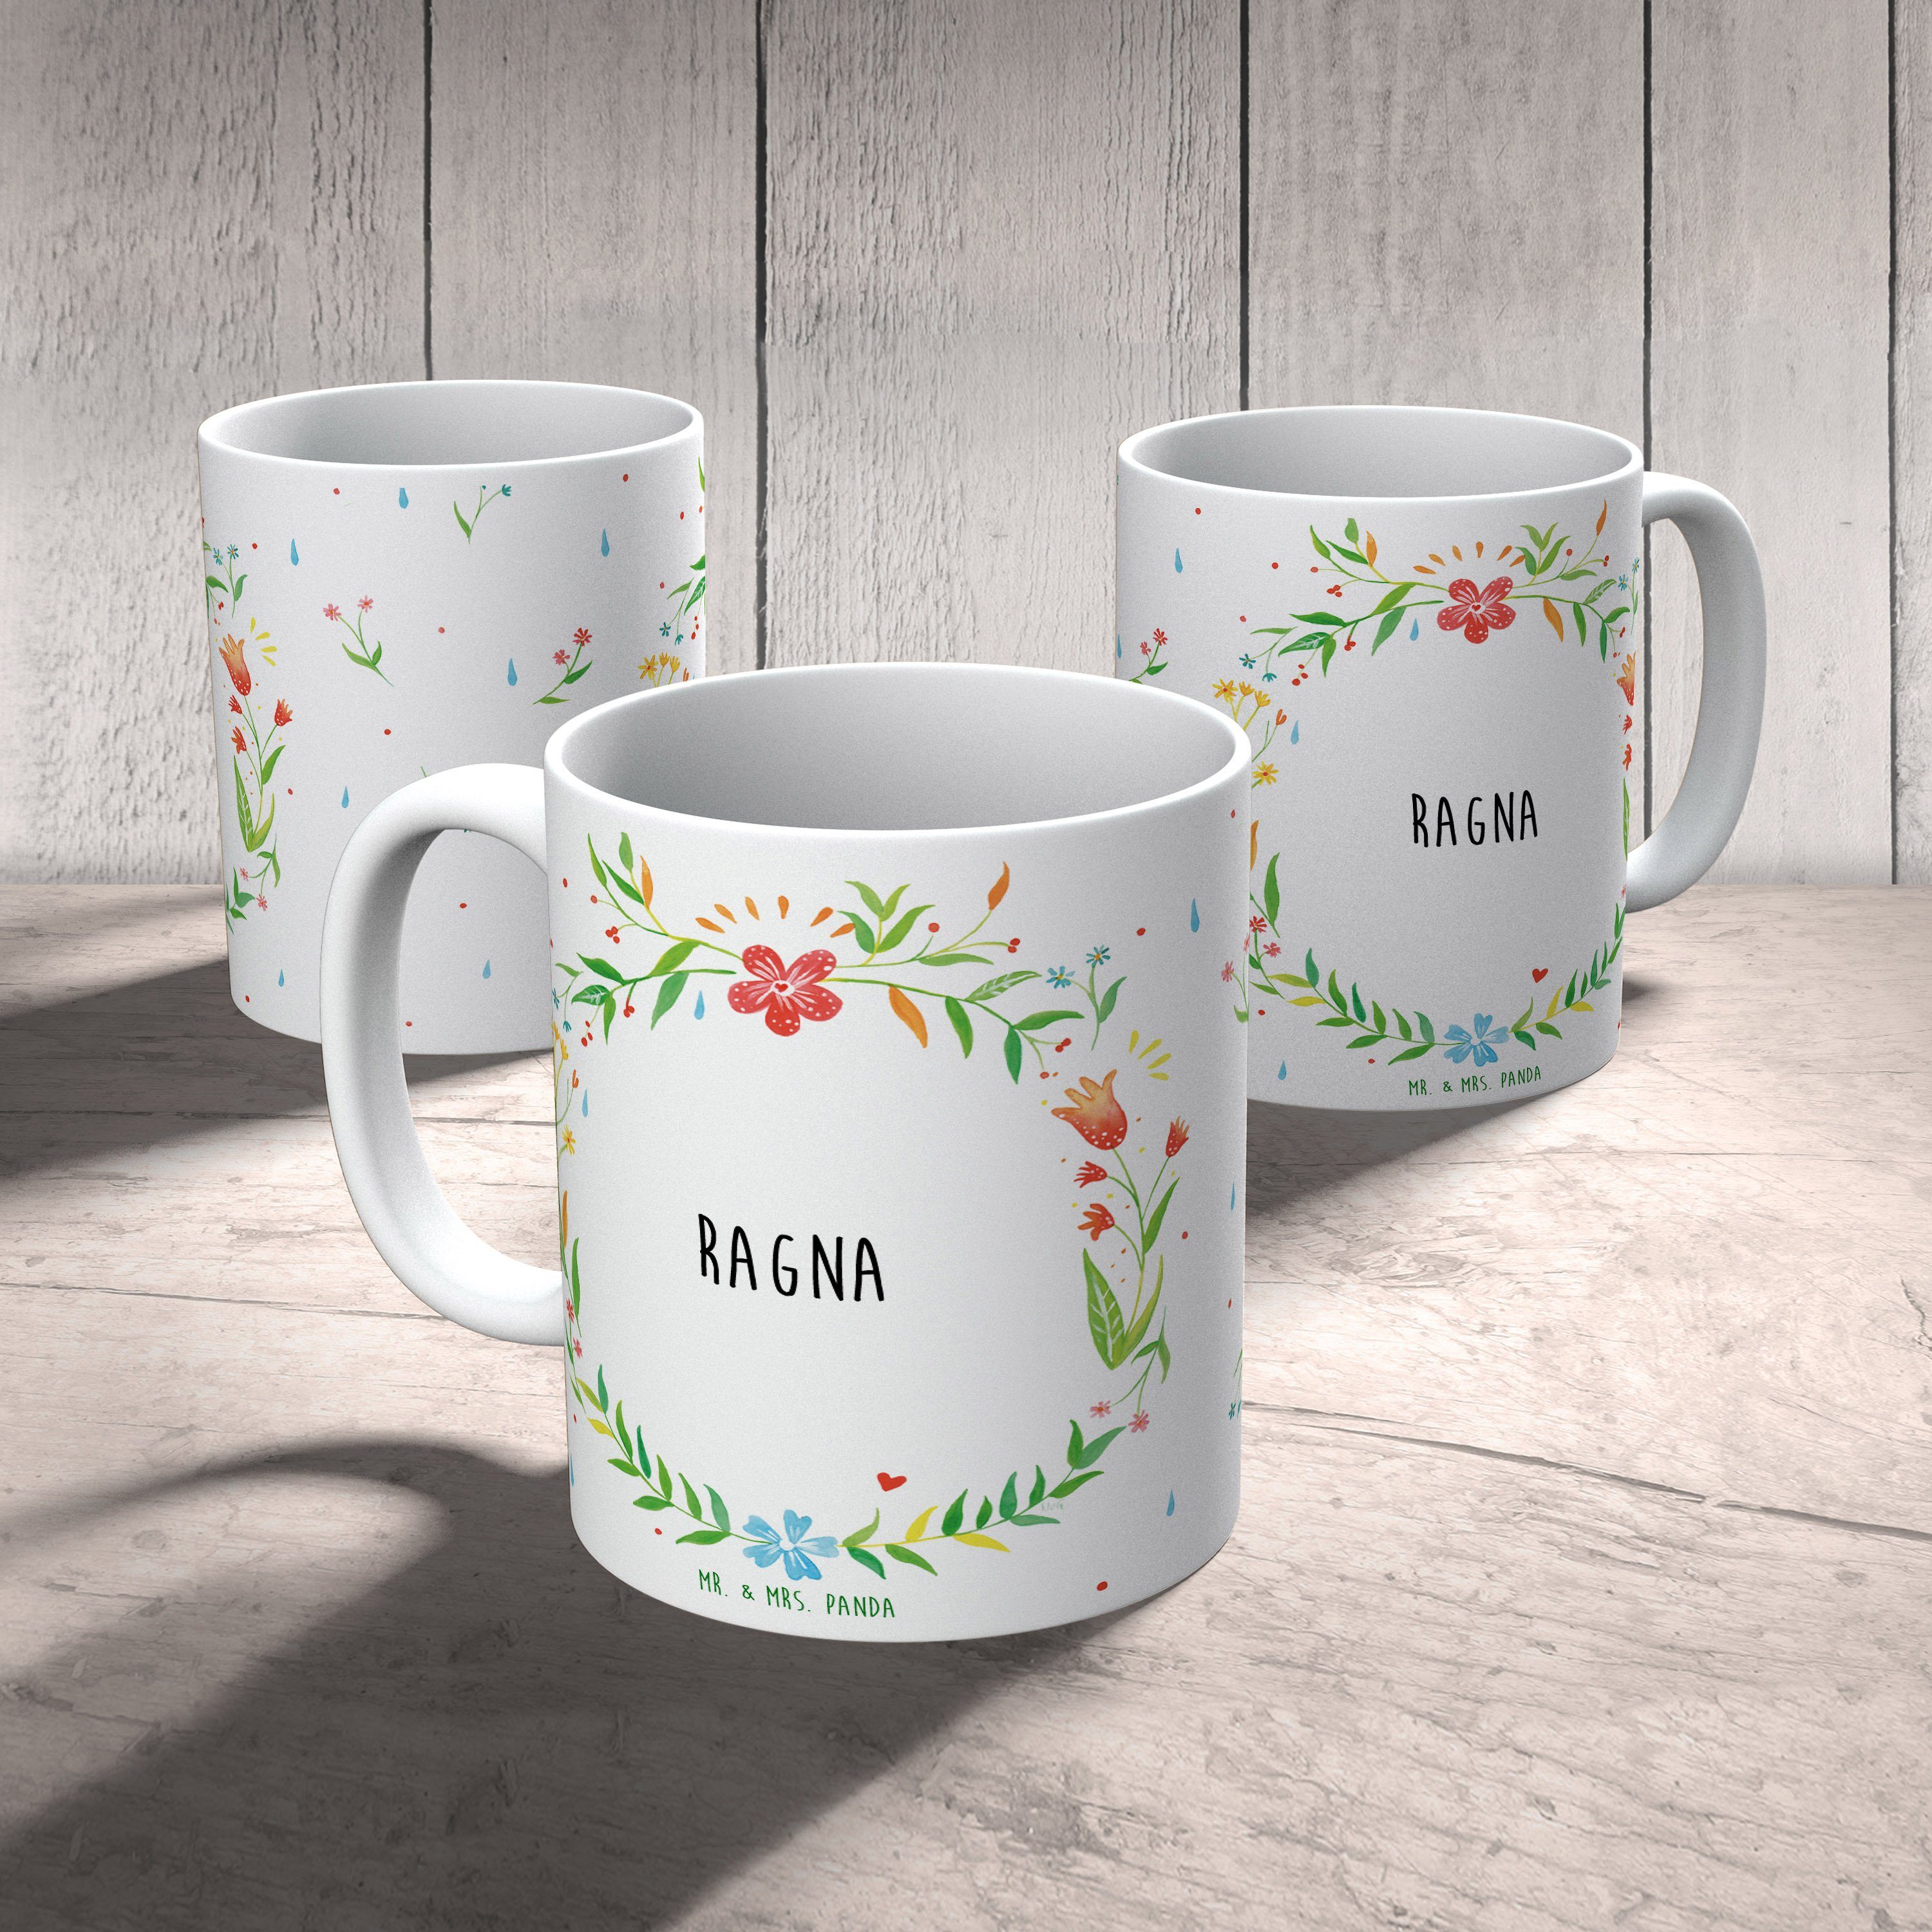 Mr. & Mrs. Panda Tasse Sprüche, Ragna Tasse Geschenk Tasse, Tasse - Keramik Motive, Tasse, Geschenk